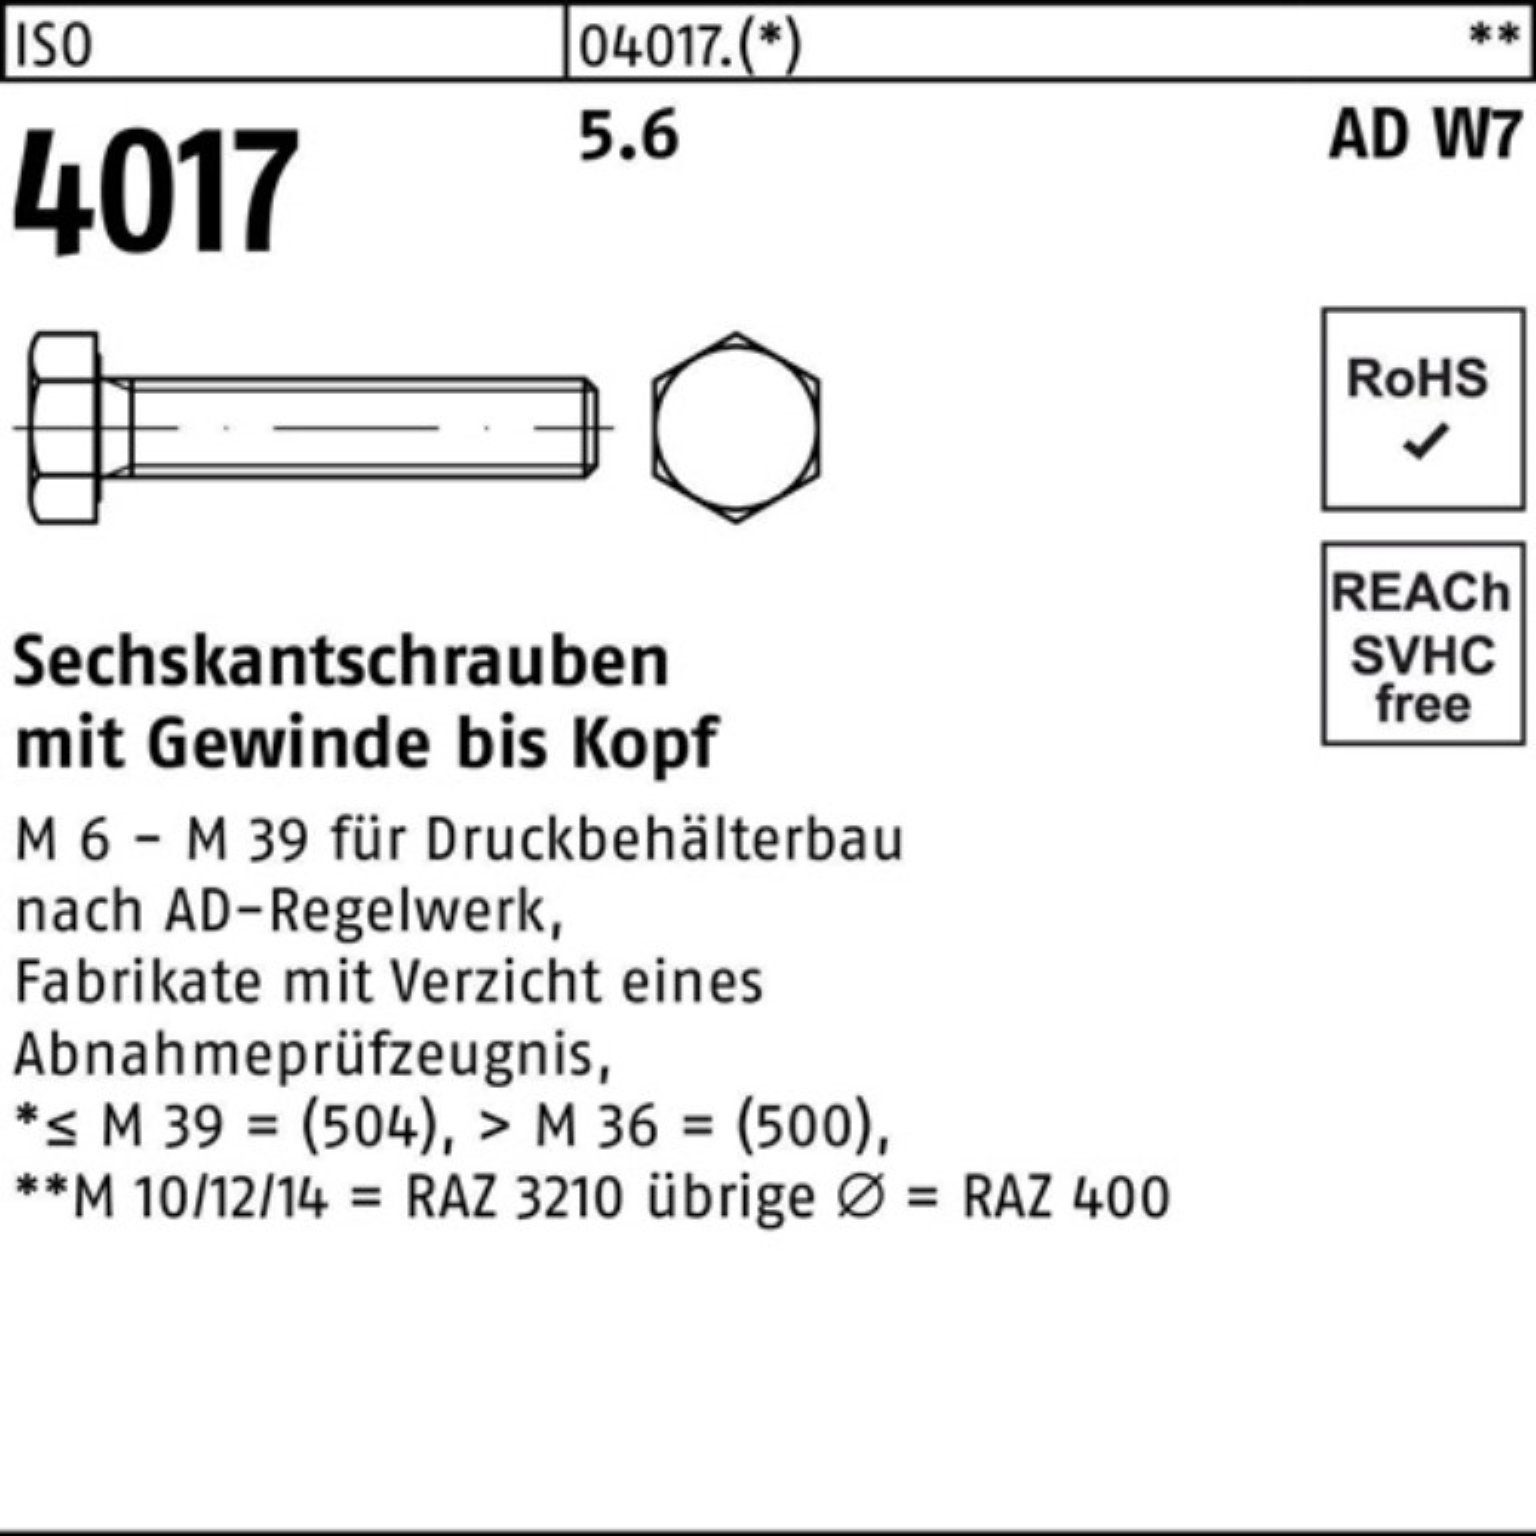 Bufab Sechskantschraube 100er 5.6 VG 110 Sechskantschraube 25 M20x 4017 AD W7 Stück ISO Pack